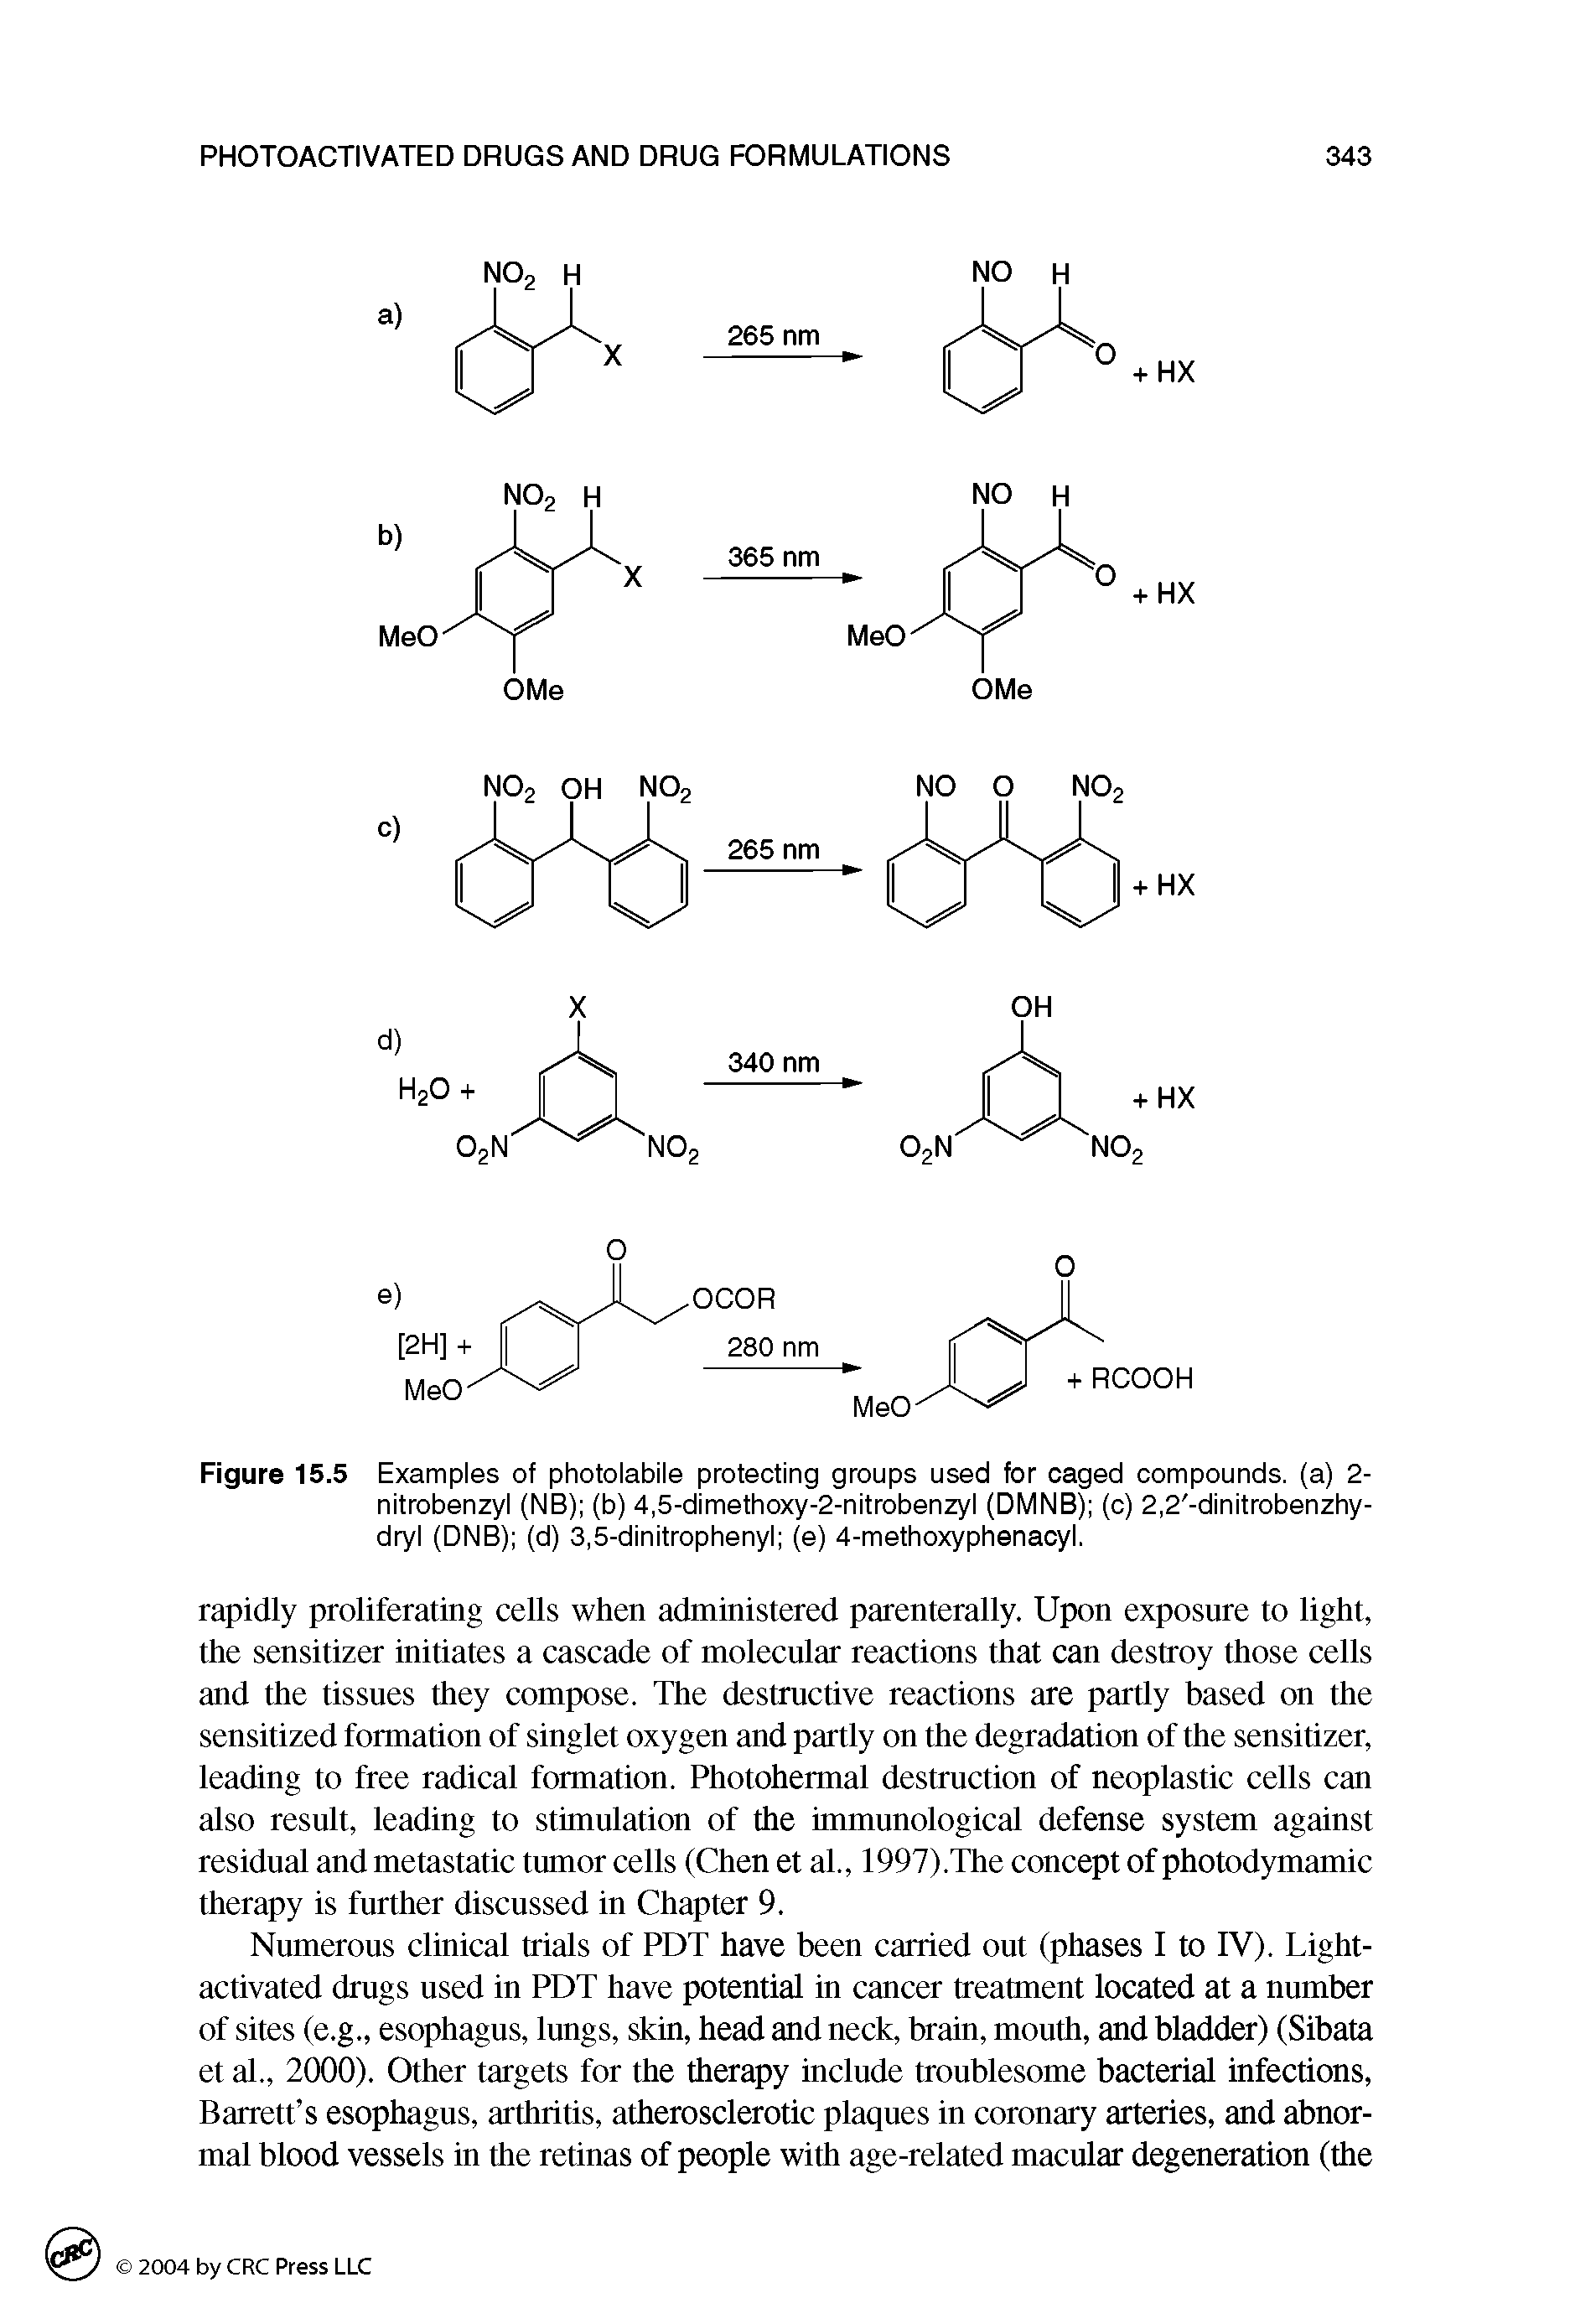 Figure 15.5 Examples of photolabile protecting groups used for caged compounds, (a) 2-nitrobenzyl (NB) (b) 4,5-dimethoxy-2-nitrobenzyl (DMNB) (c) 2,2 -dinitrobenzhy-dryl (DNB) (d) 3,5-dinitrophenyl (e) 4-methoxyphenacyl.